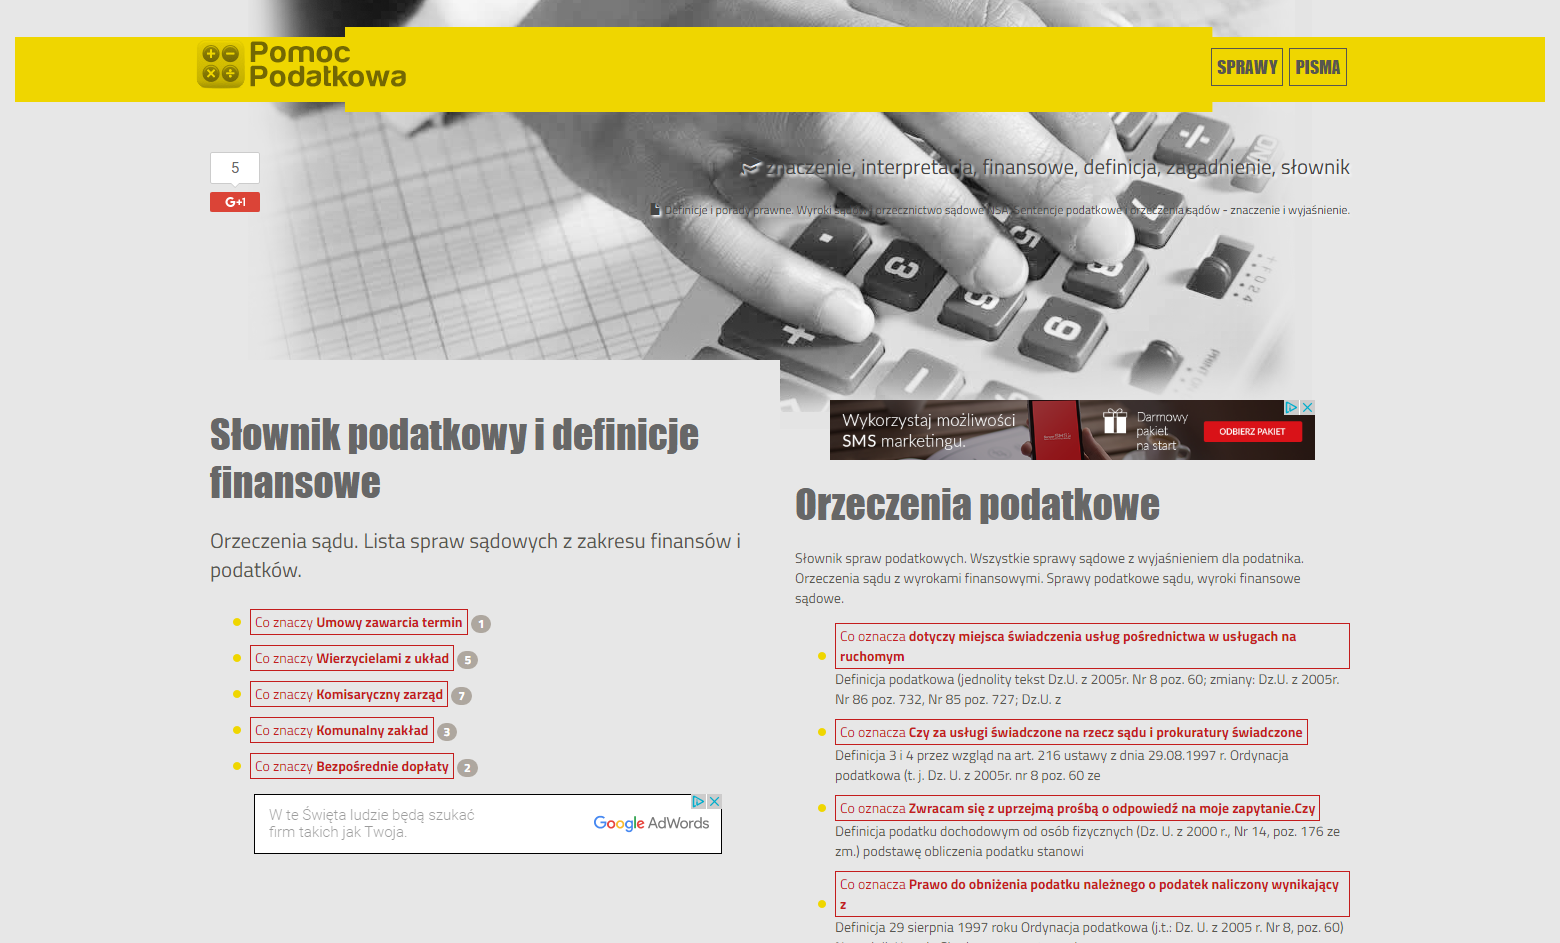 Proyecto Pomoc-Podatkowa.pl